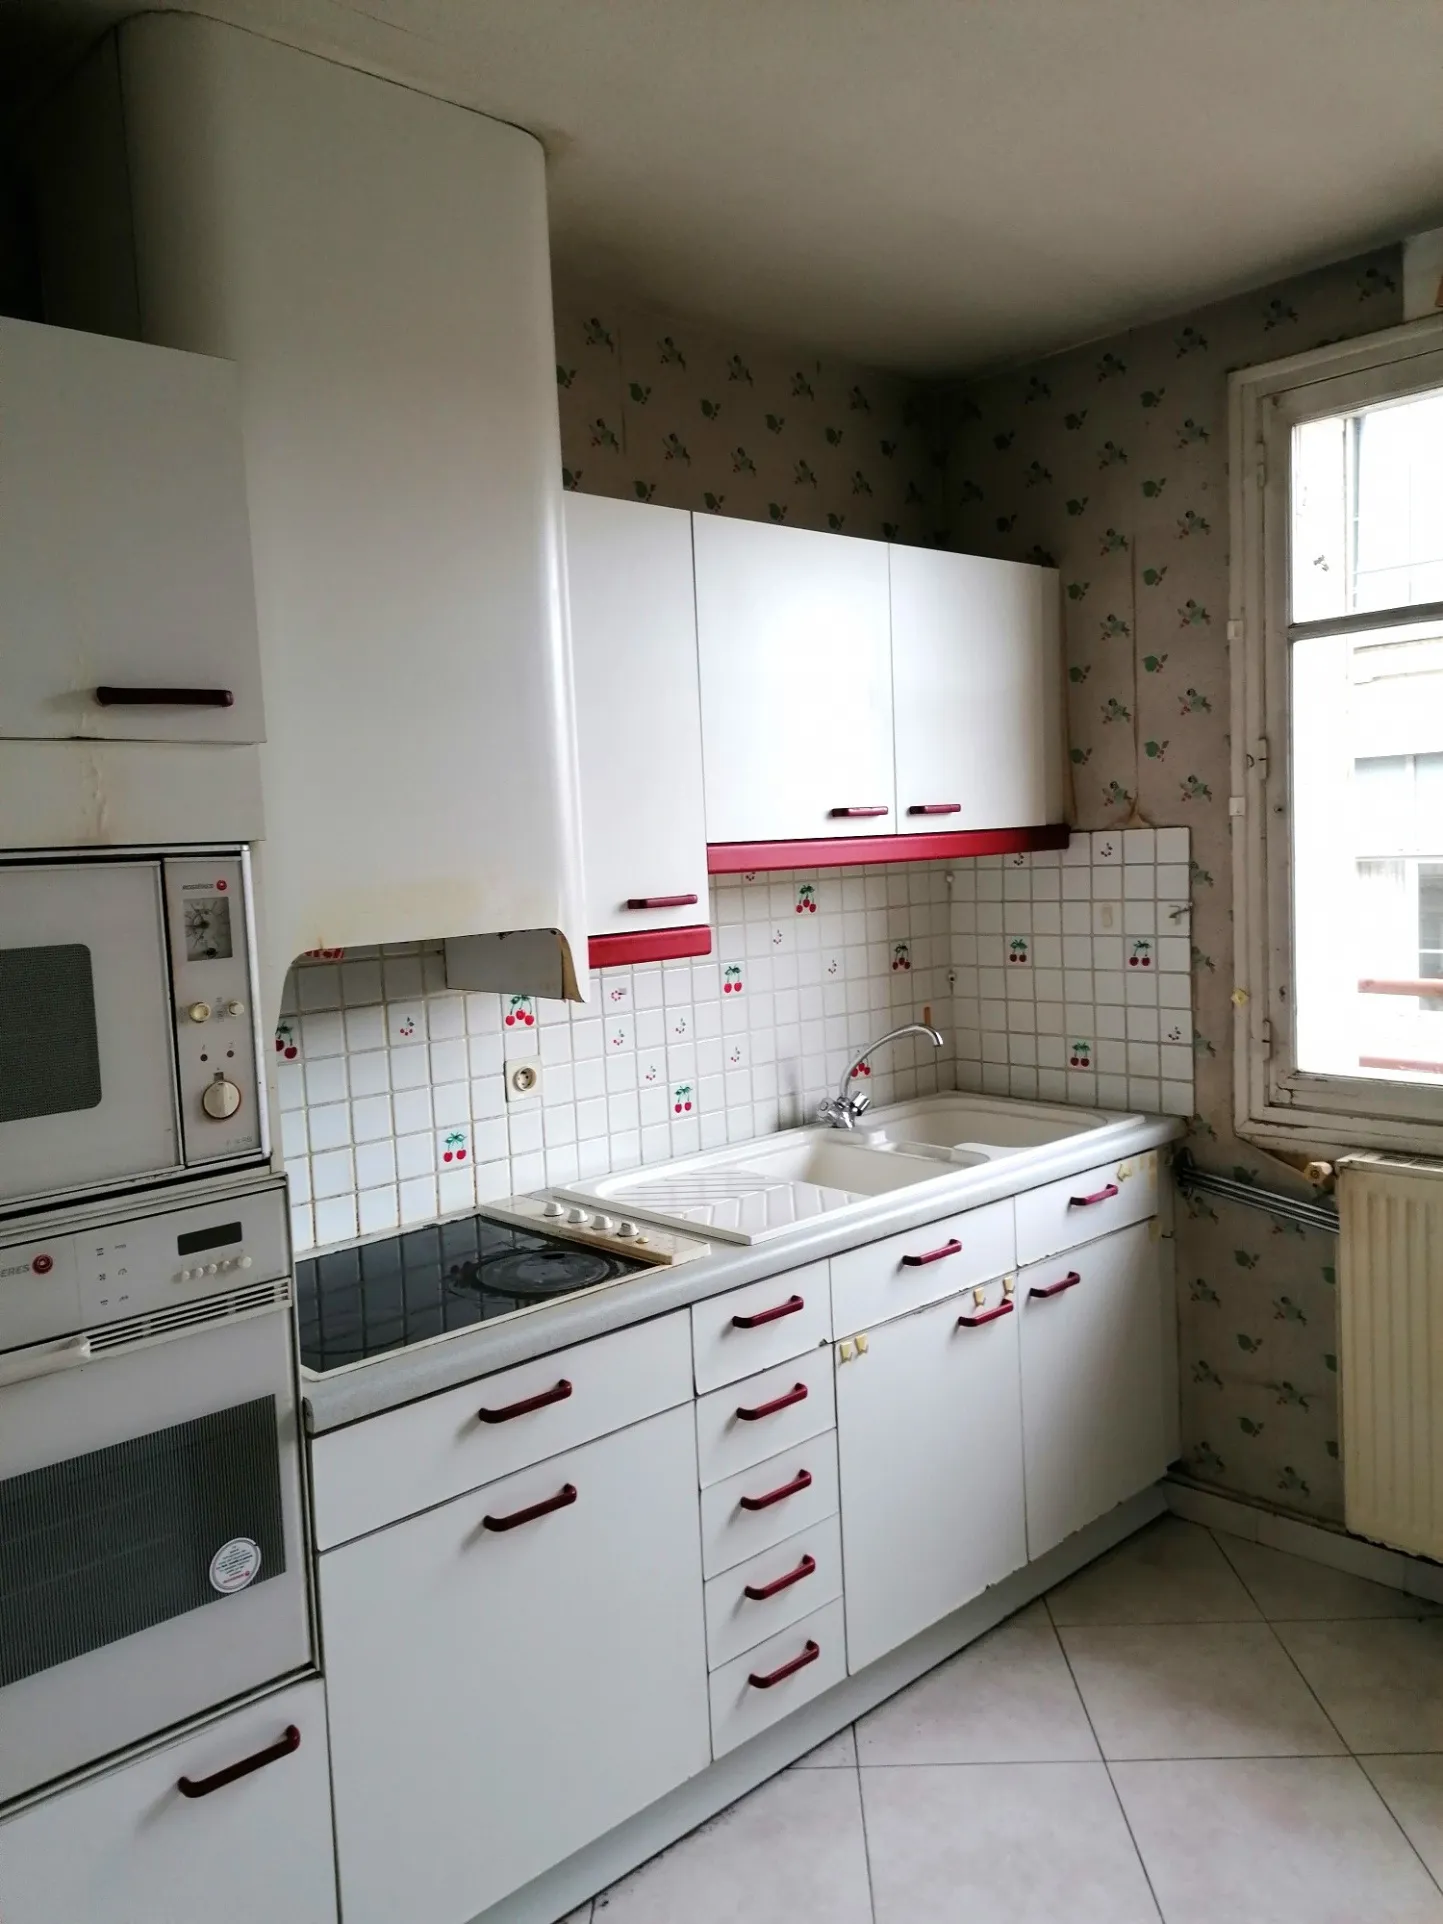 Appartement à Autun avec 3 Chambres - 57.000 euros 